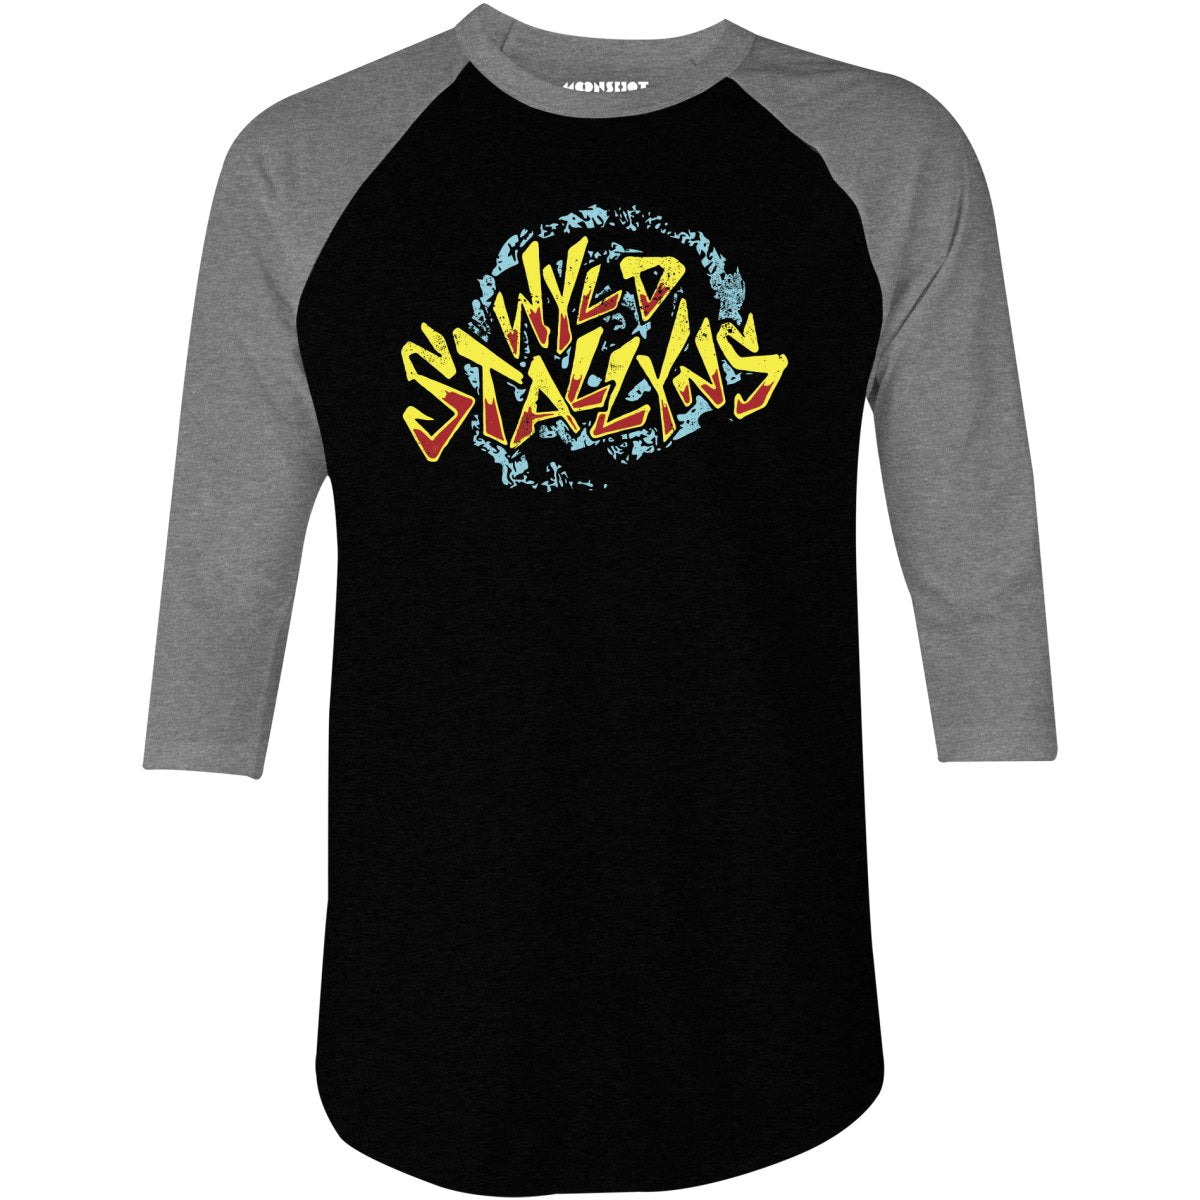 Wyld Stallyns - 3/4 Sleeve Raglan T-Shirt